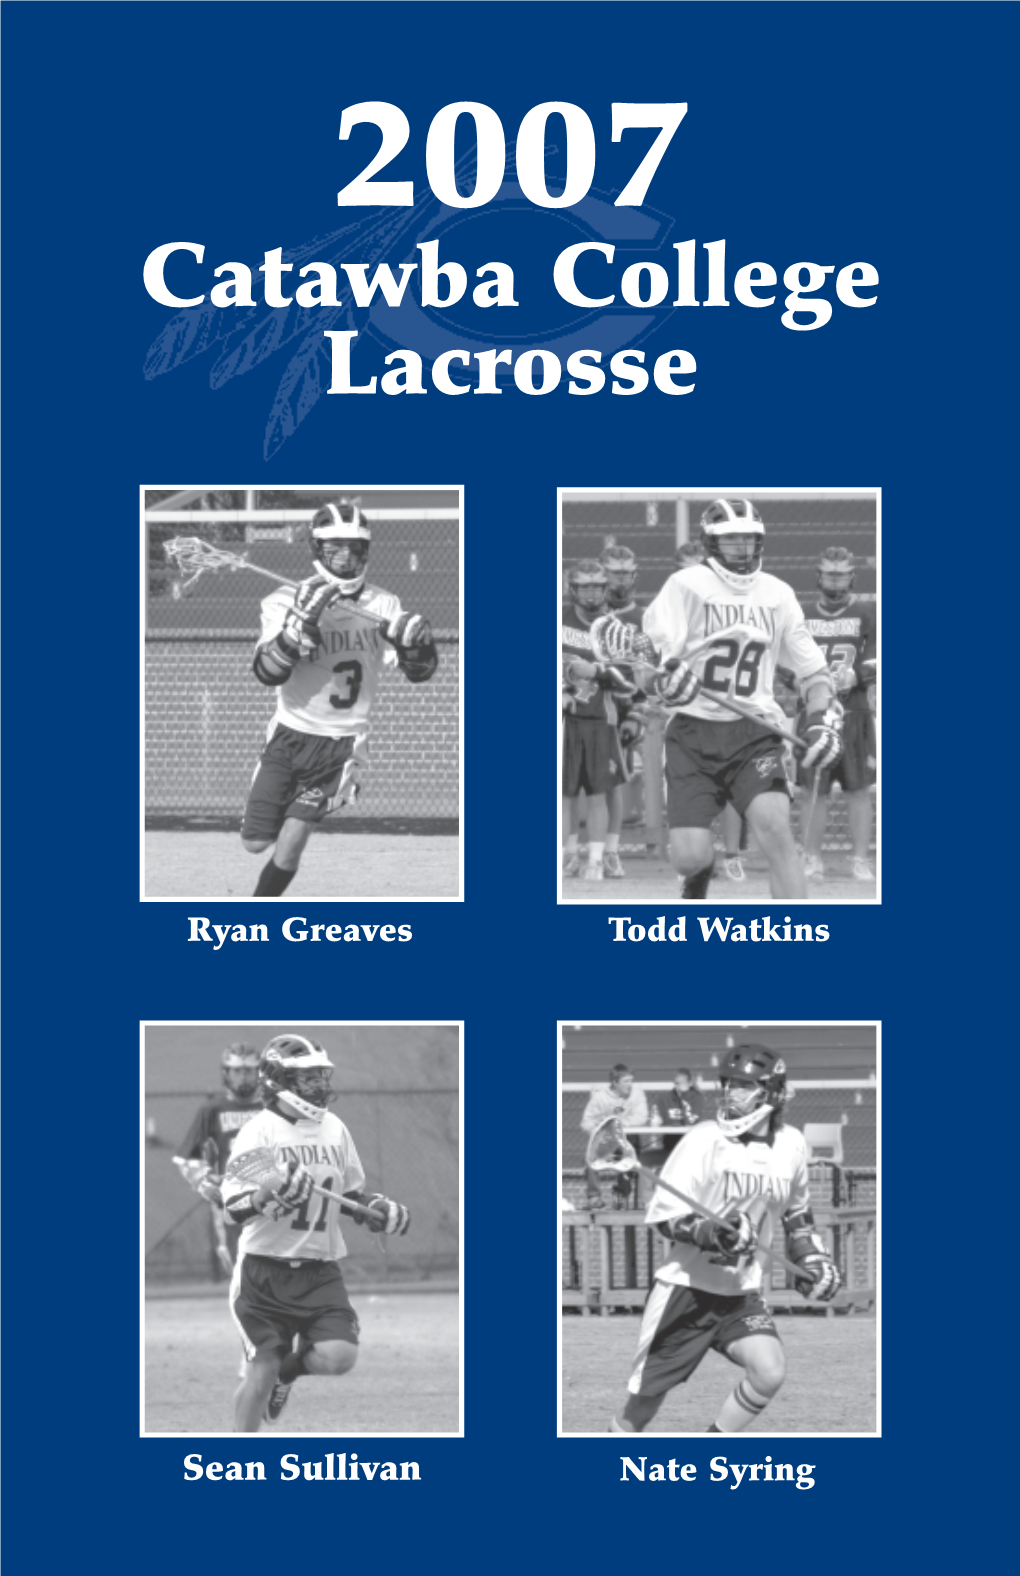 Catawba College Lacrosse